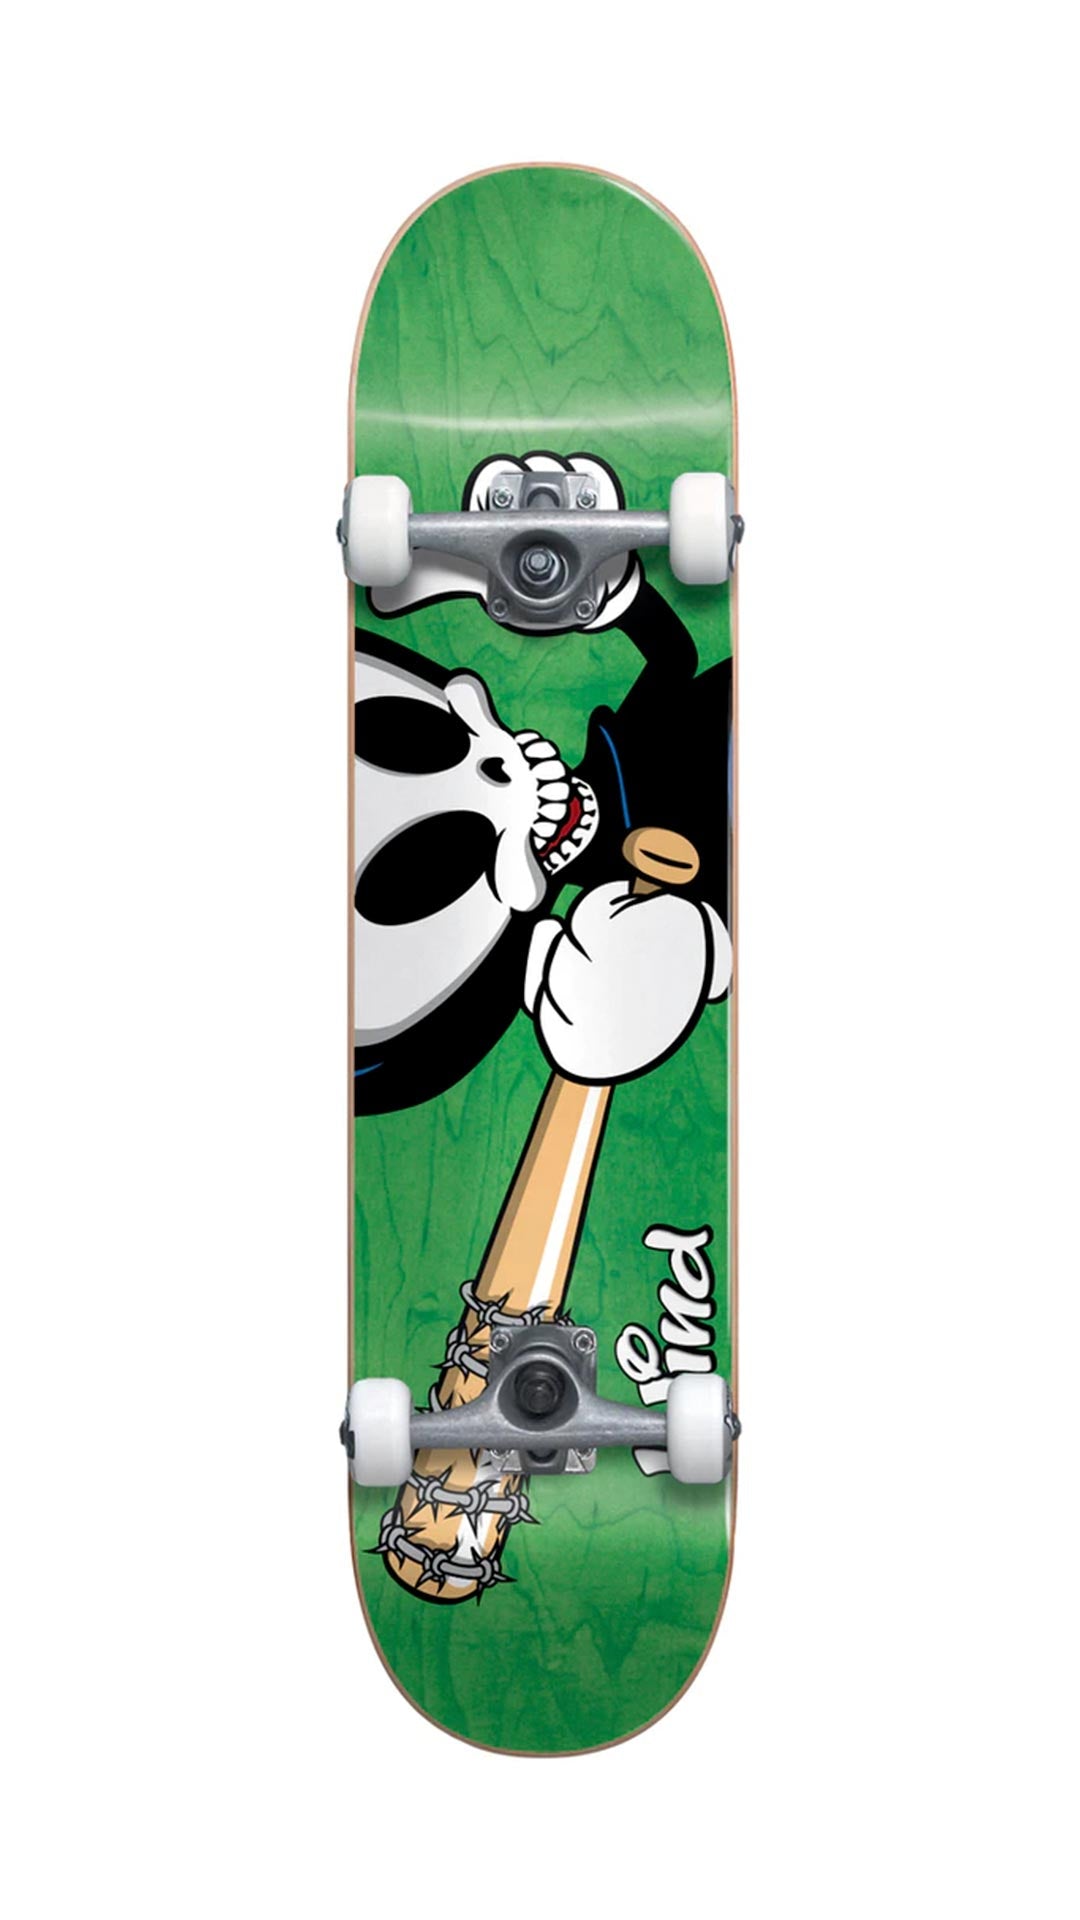 Blind Reaper Character FP Premium 7.75 Green Skate Complete - Completos Completos Blind Skateboards 